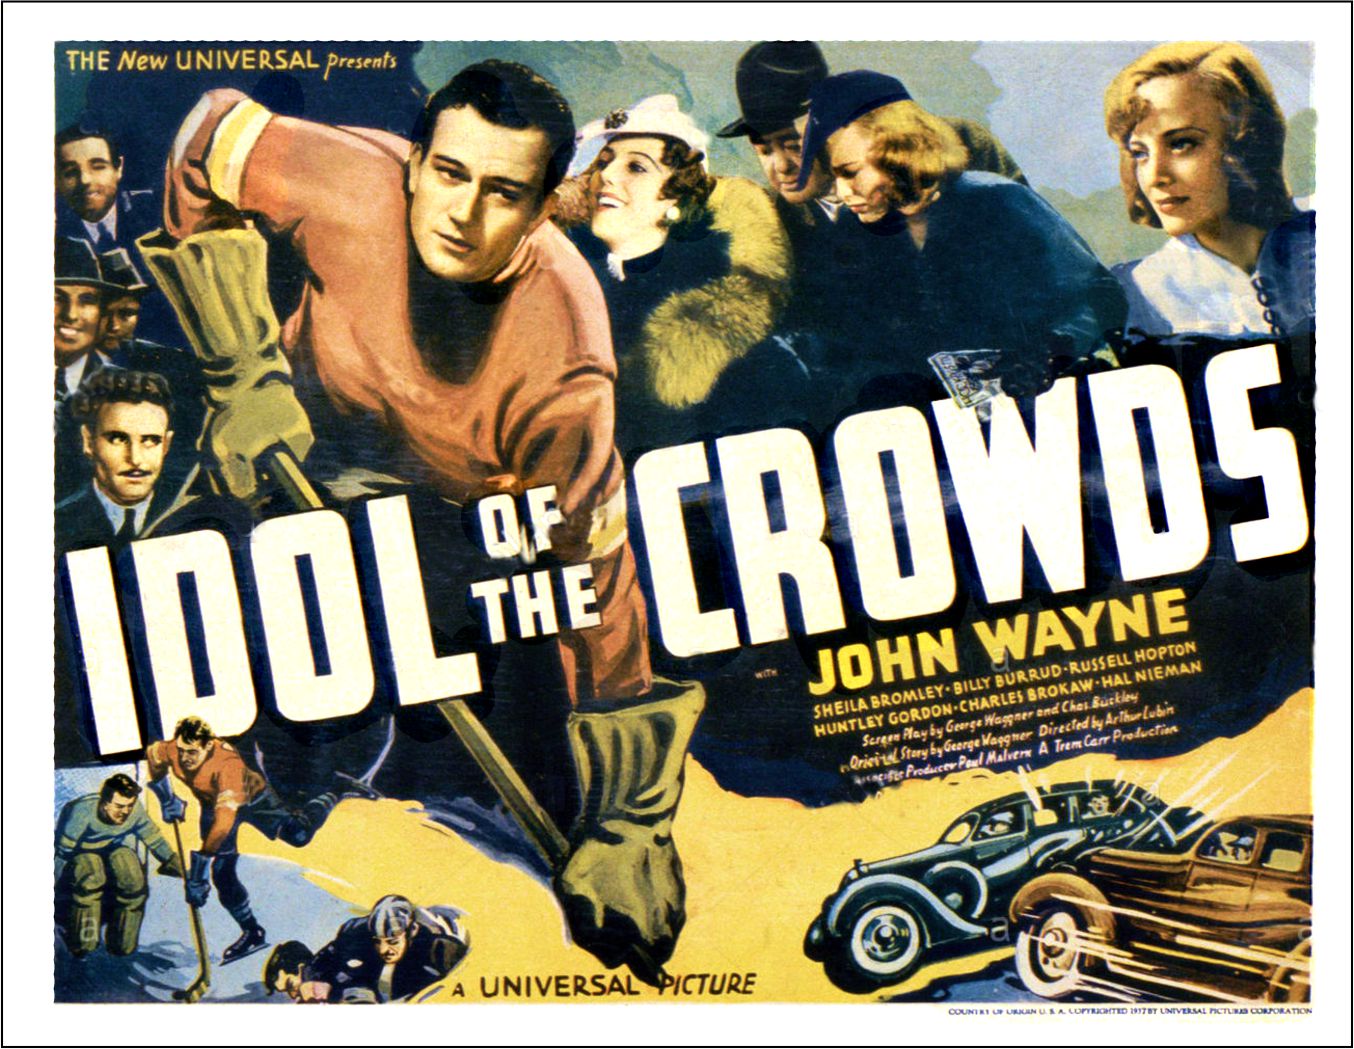 Idol of the Crowds John Wayne 1937 lobby card 5